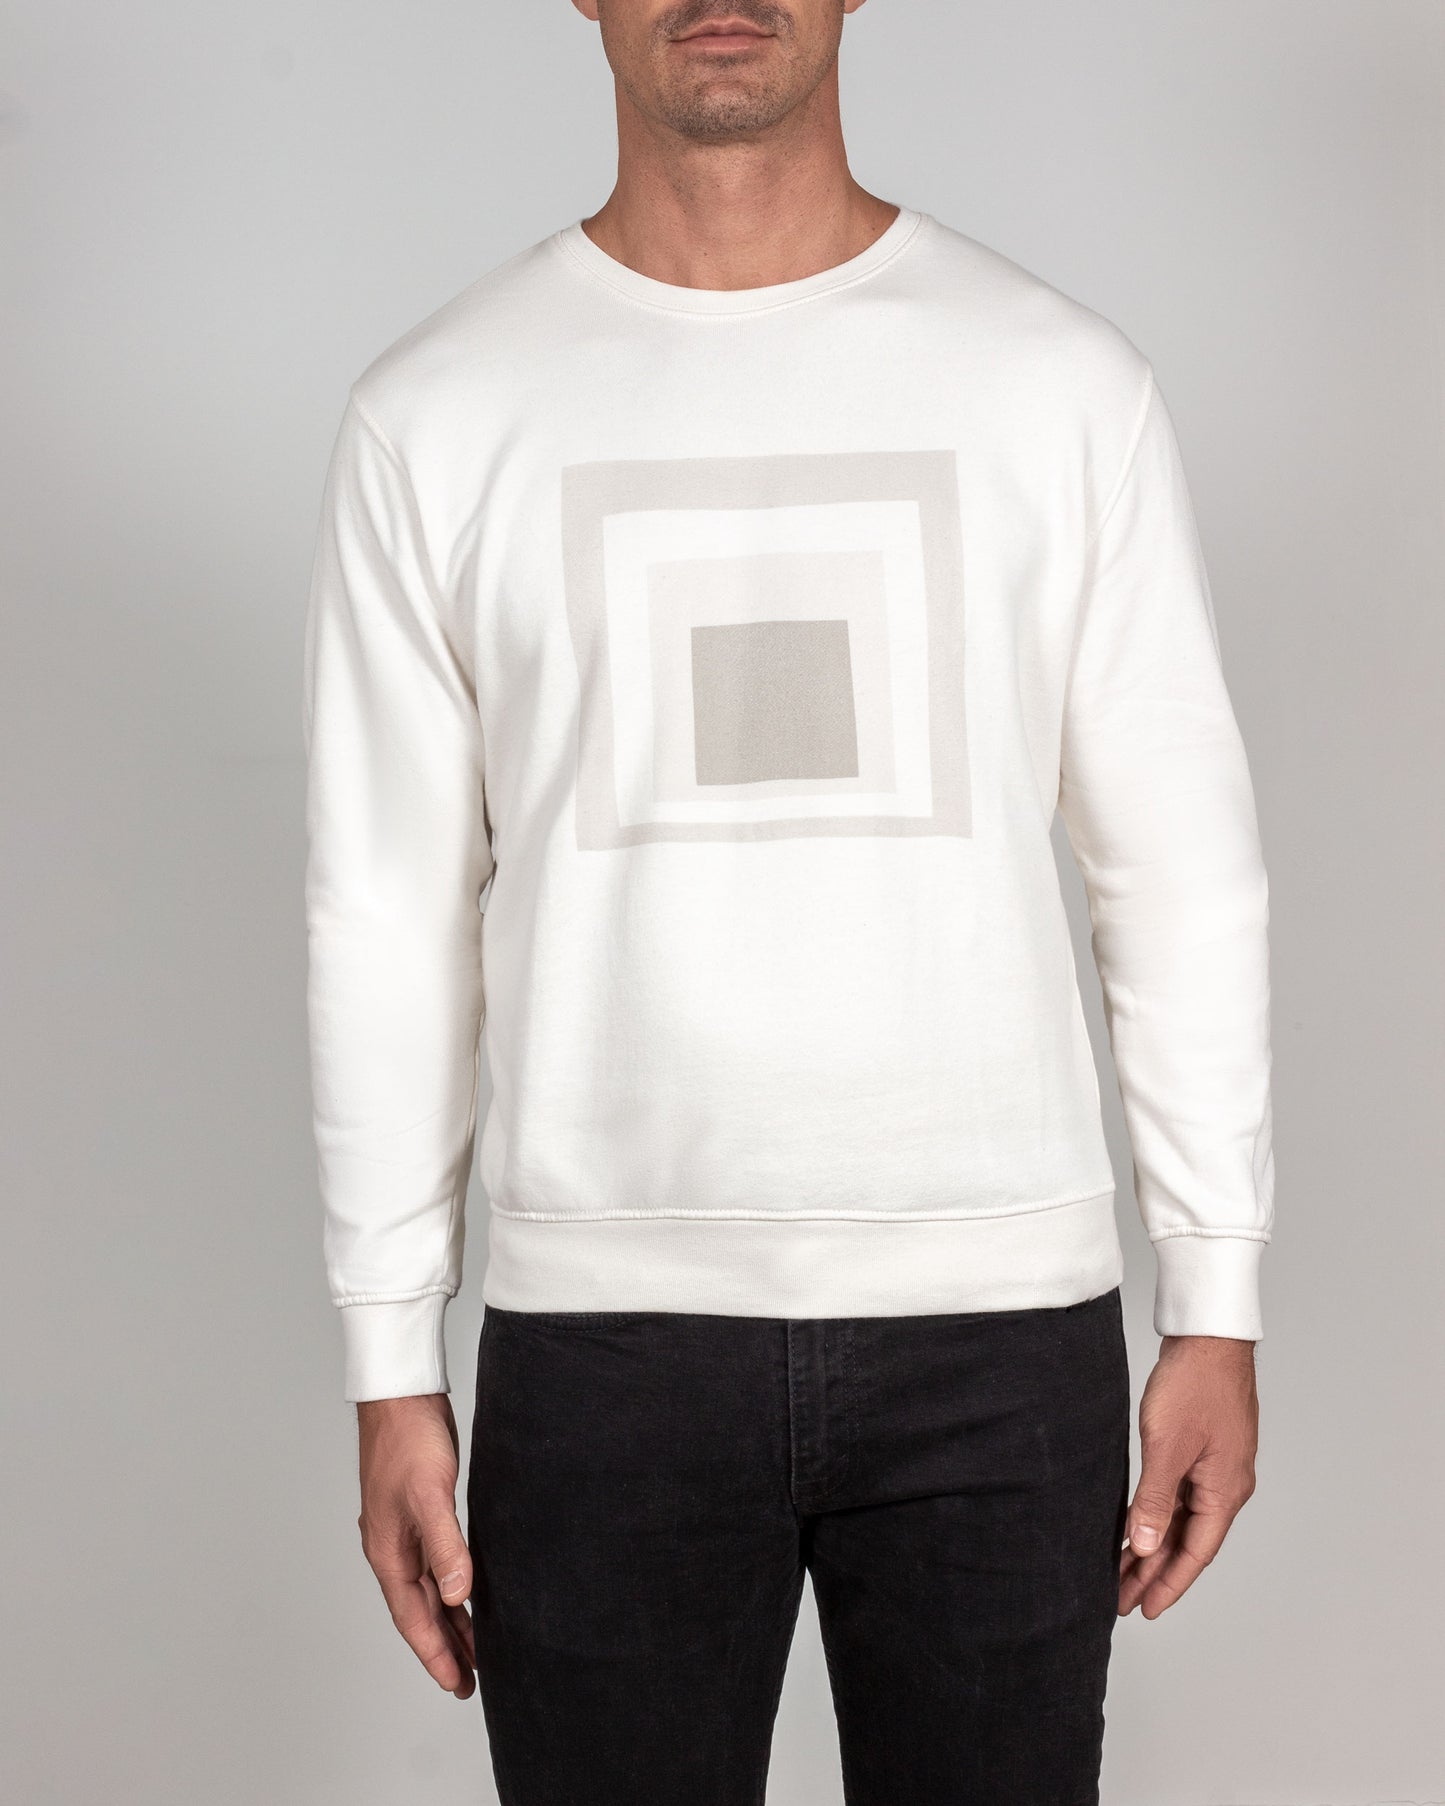 Homage to the Square Sweatshirt, White